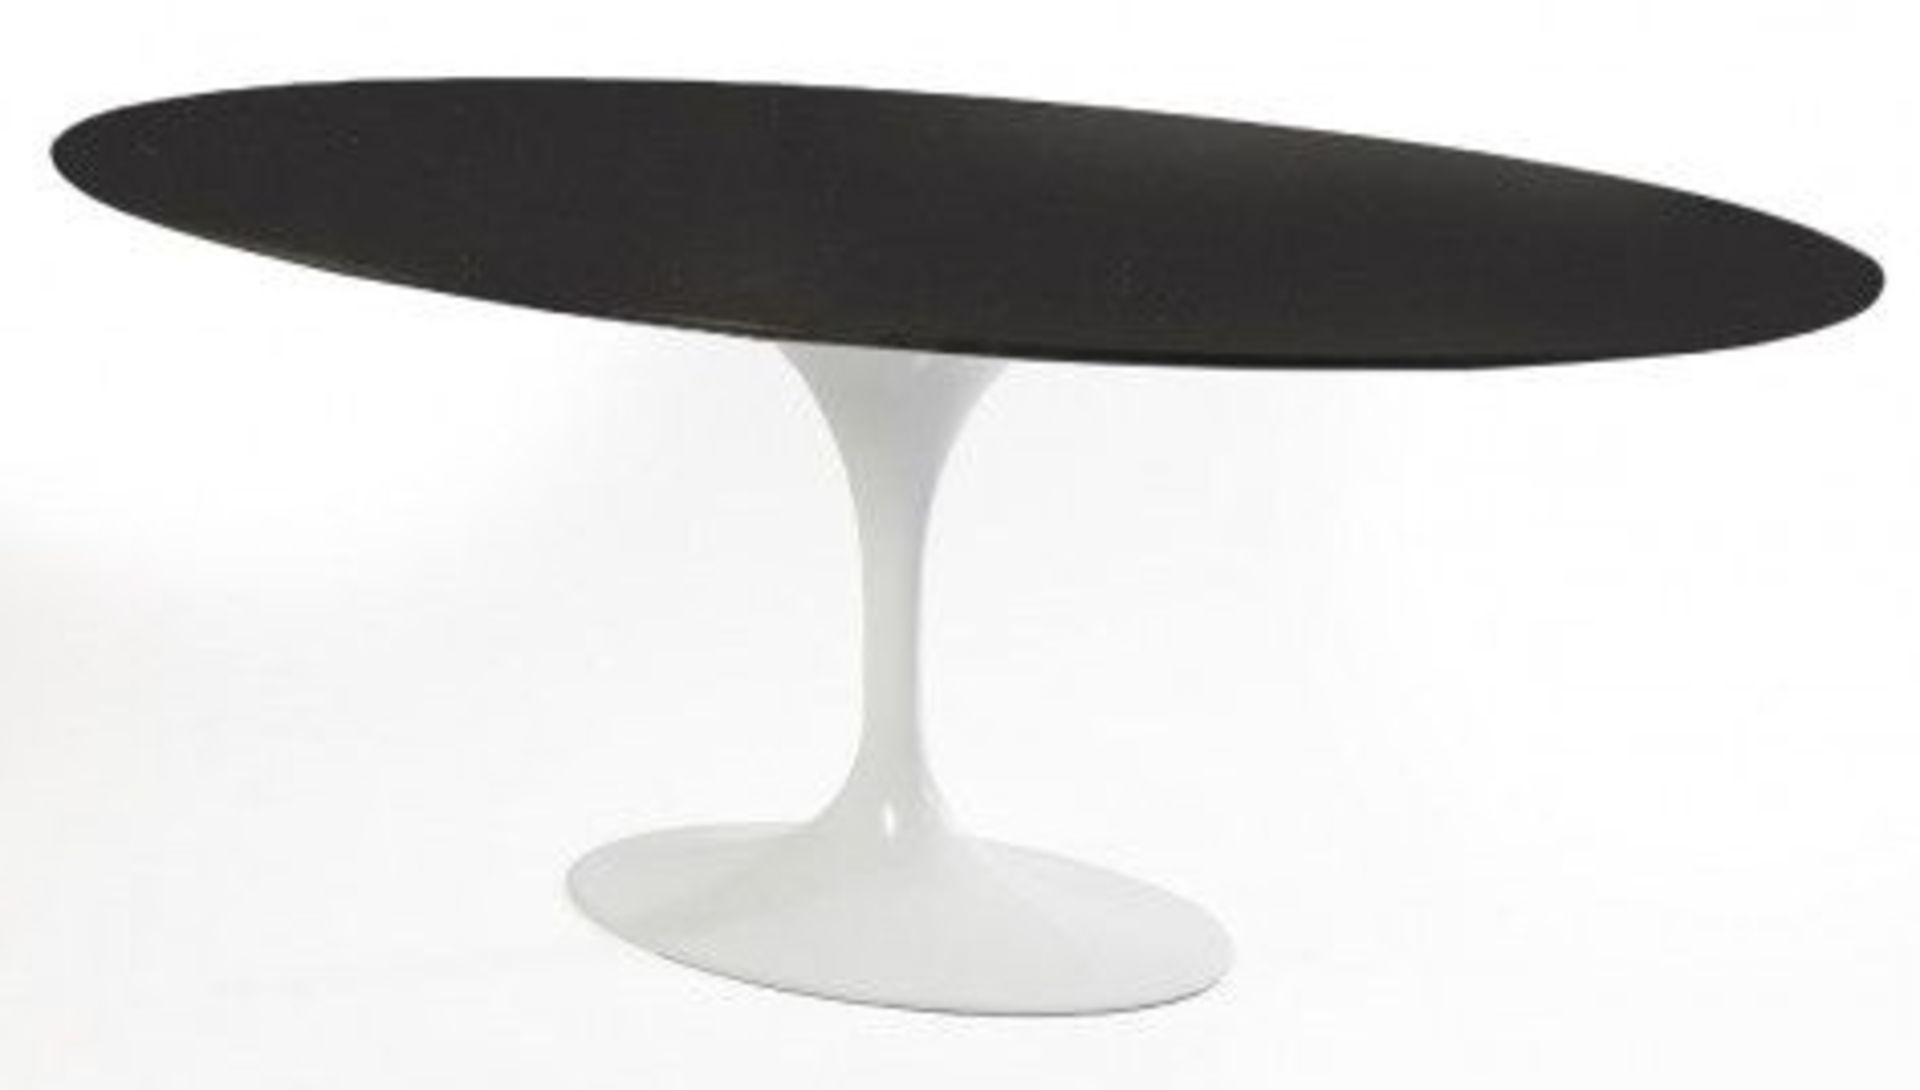 1 x Eero Saarinen Inspired 198cm Grey Granite Tulip Dining Table - New and Boxed - RRP £4,000! - Image 2 of 2